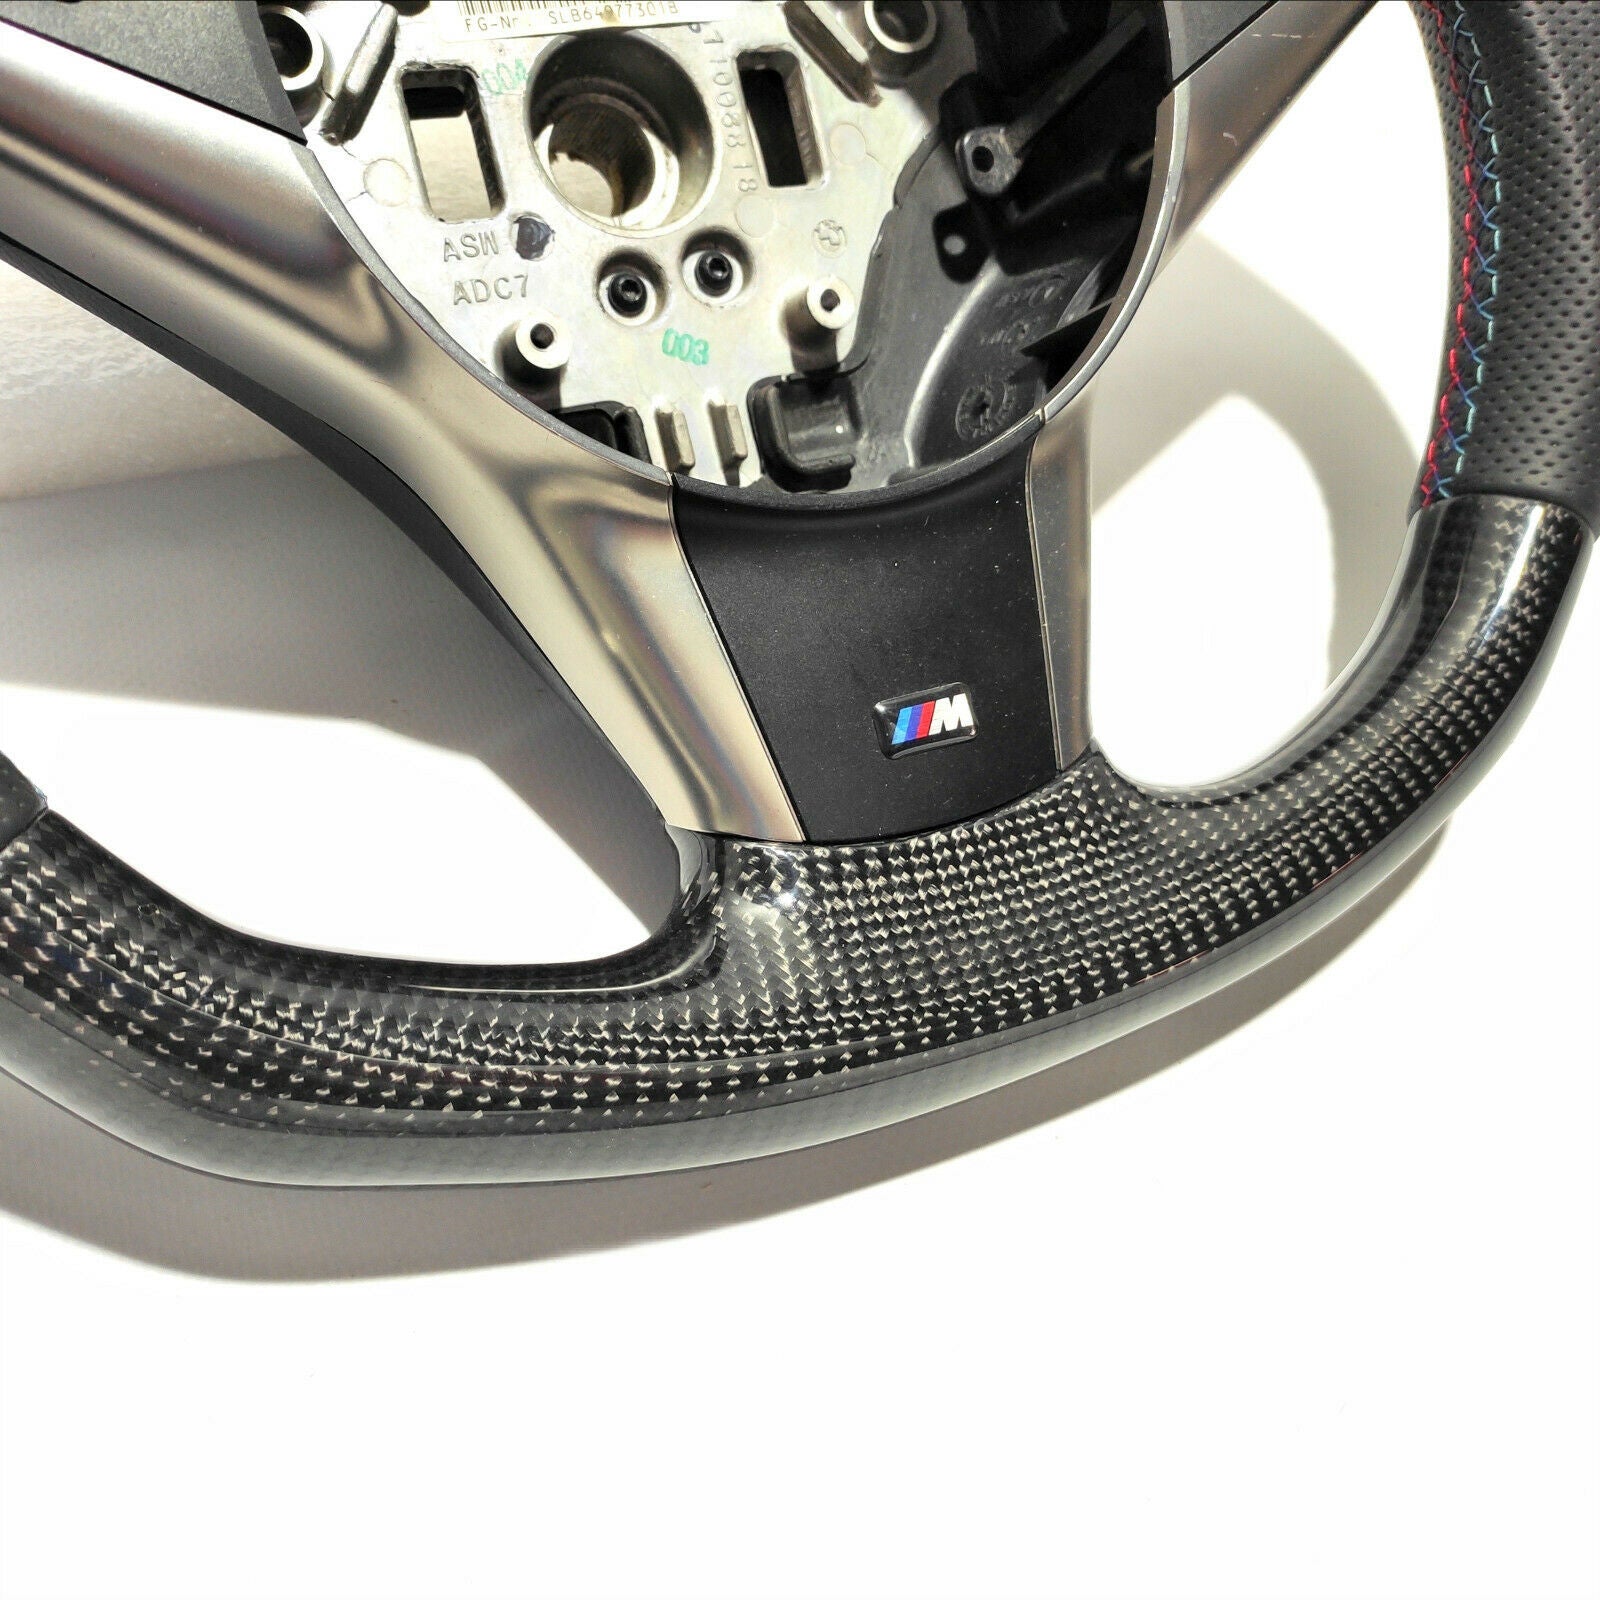 BMW E60 Steering Wheel Carbon Fiber Leather Red Stripe Flat Bottom